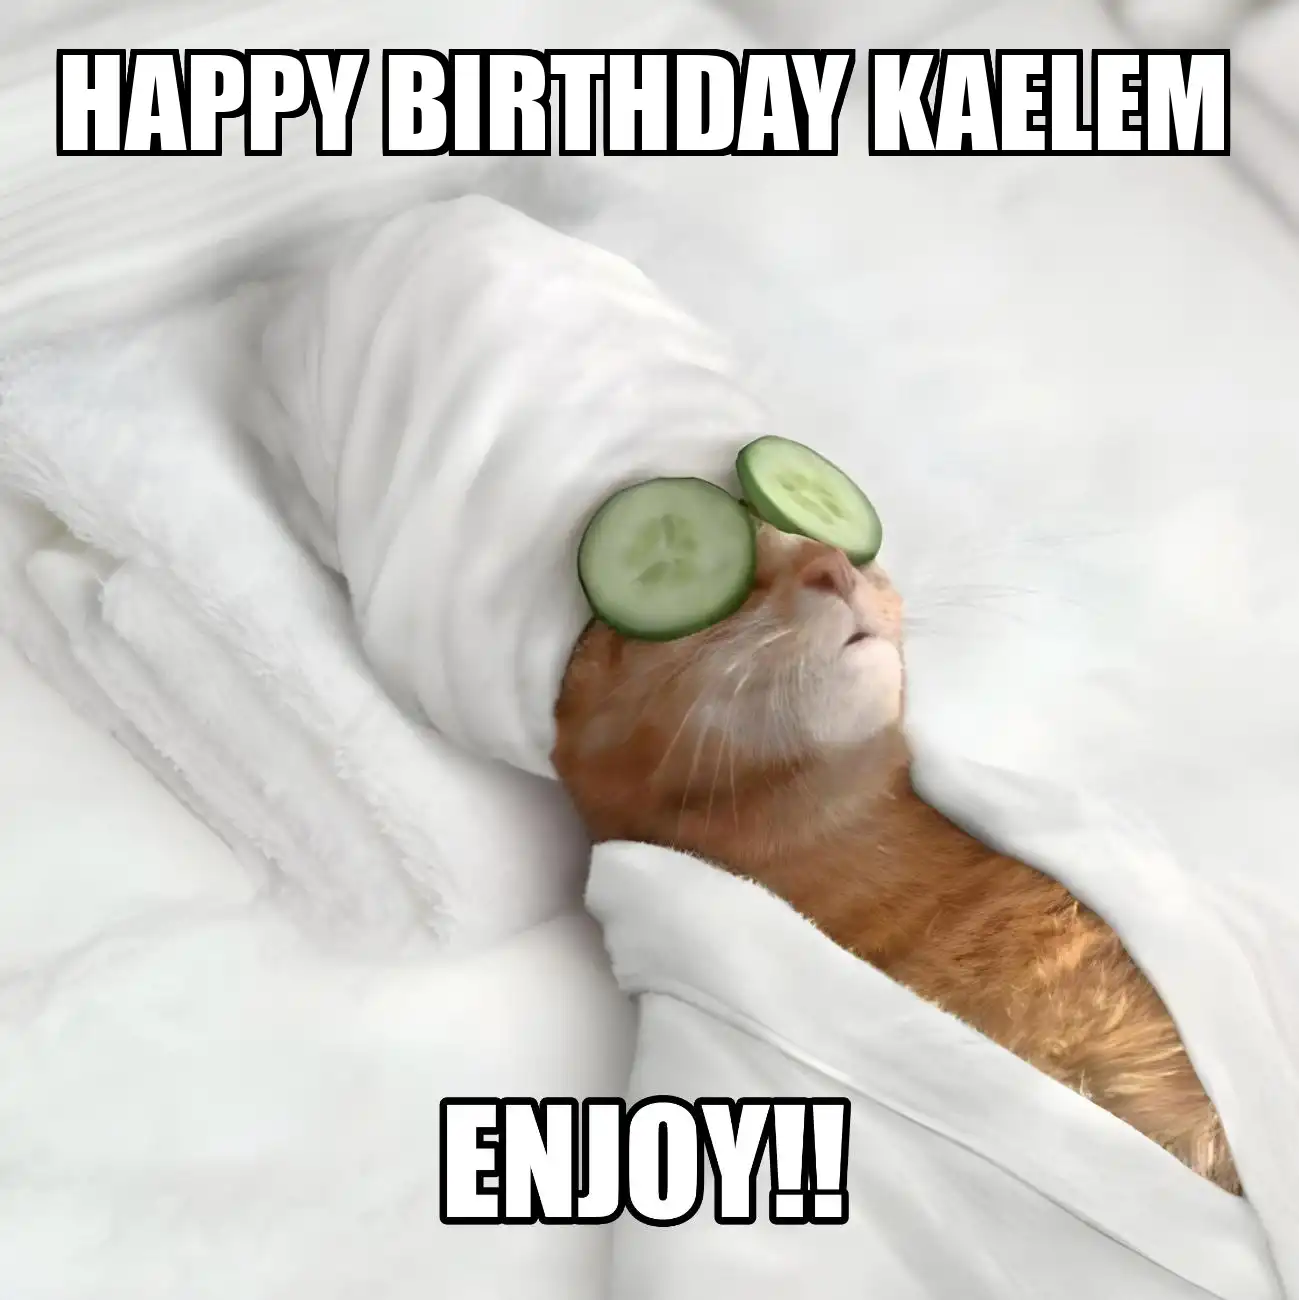 Happy Birthday Kaelem Enjoy Cat Meme